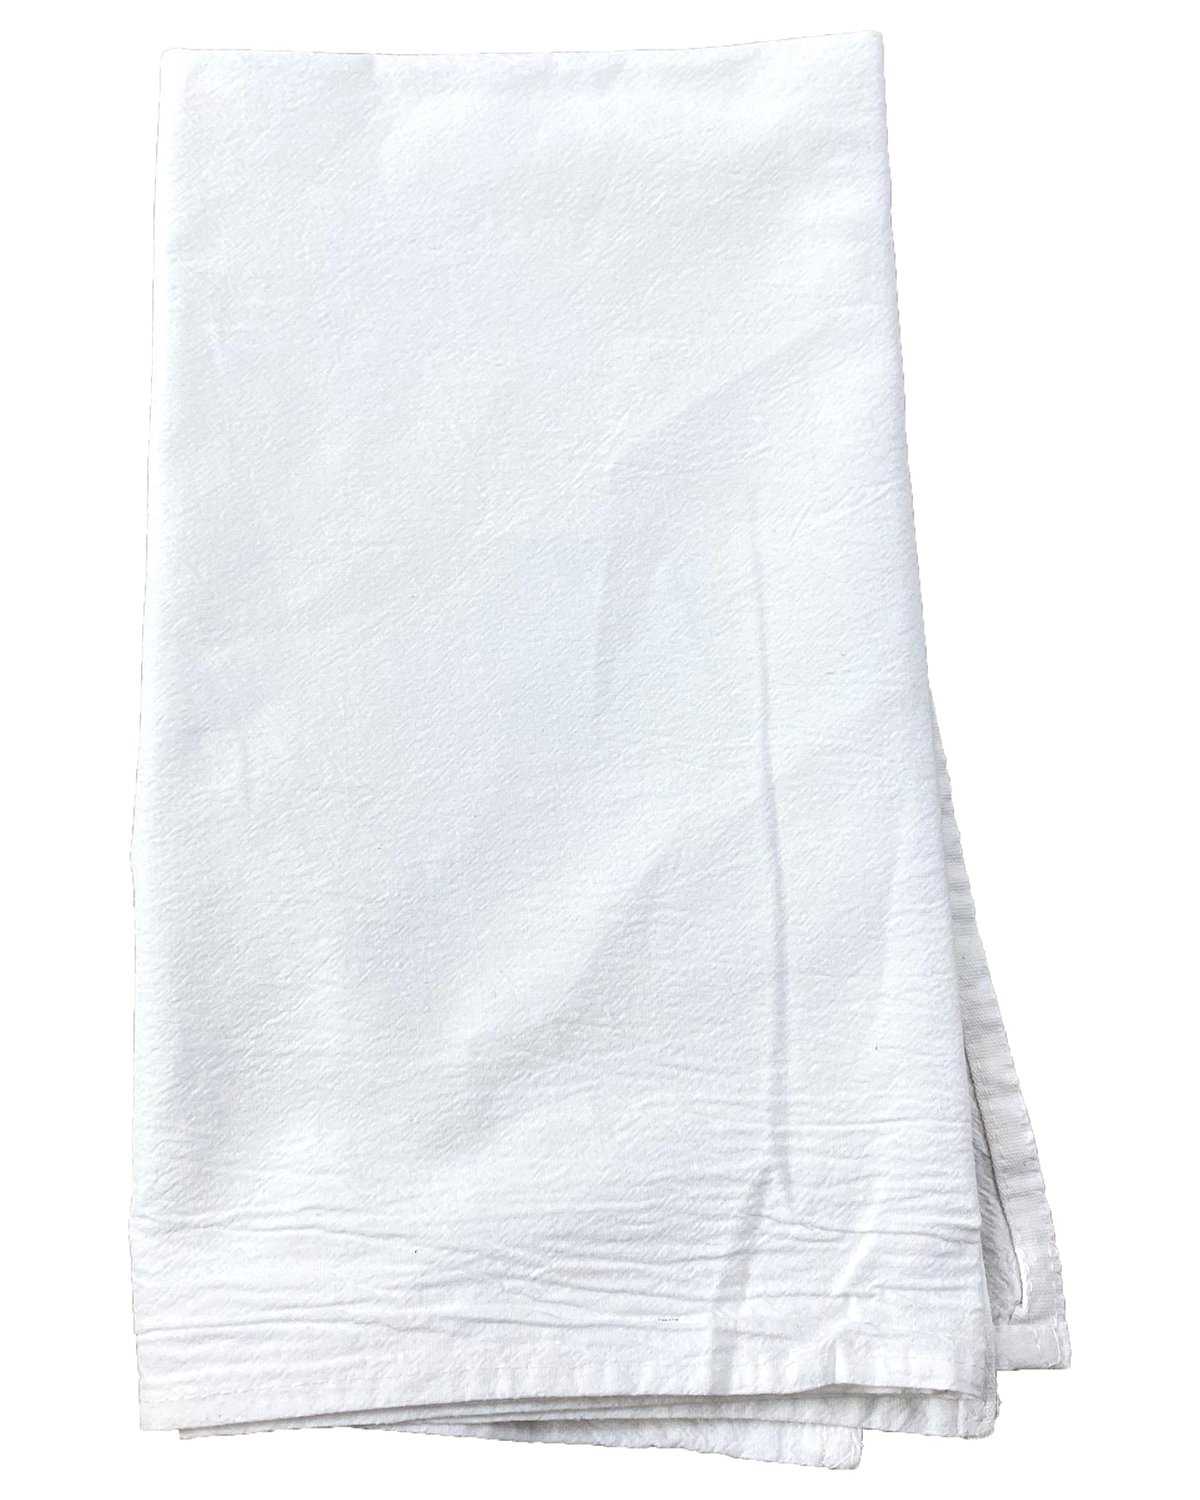 American Flour Sack Towel 28x29-